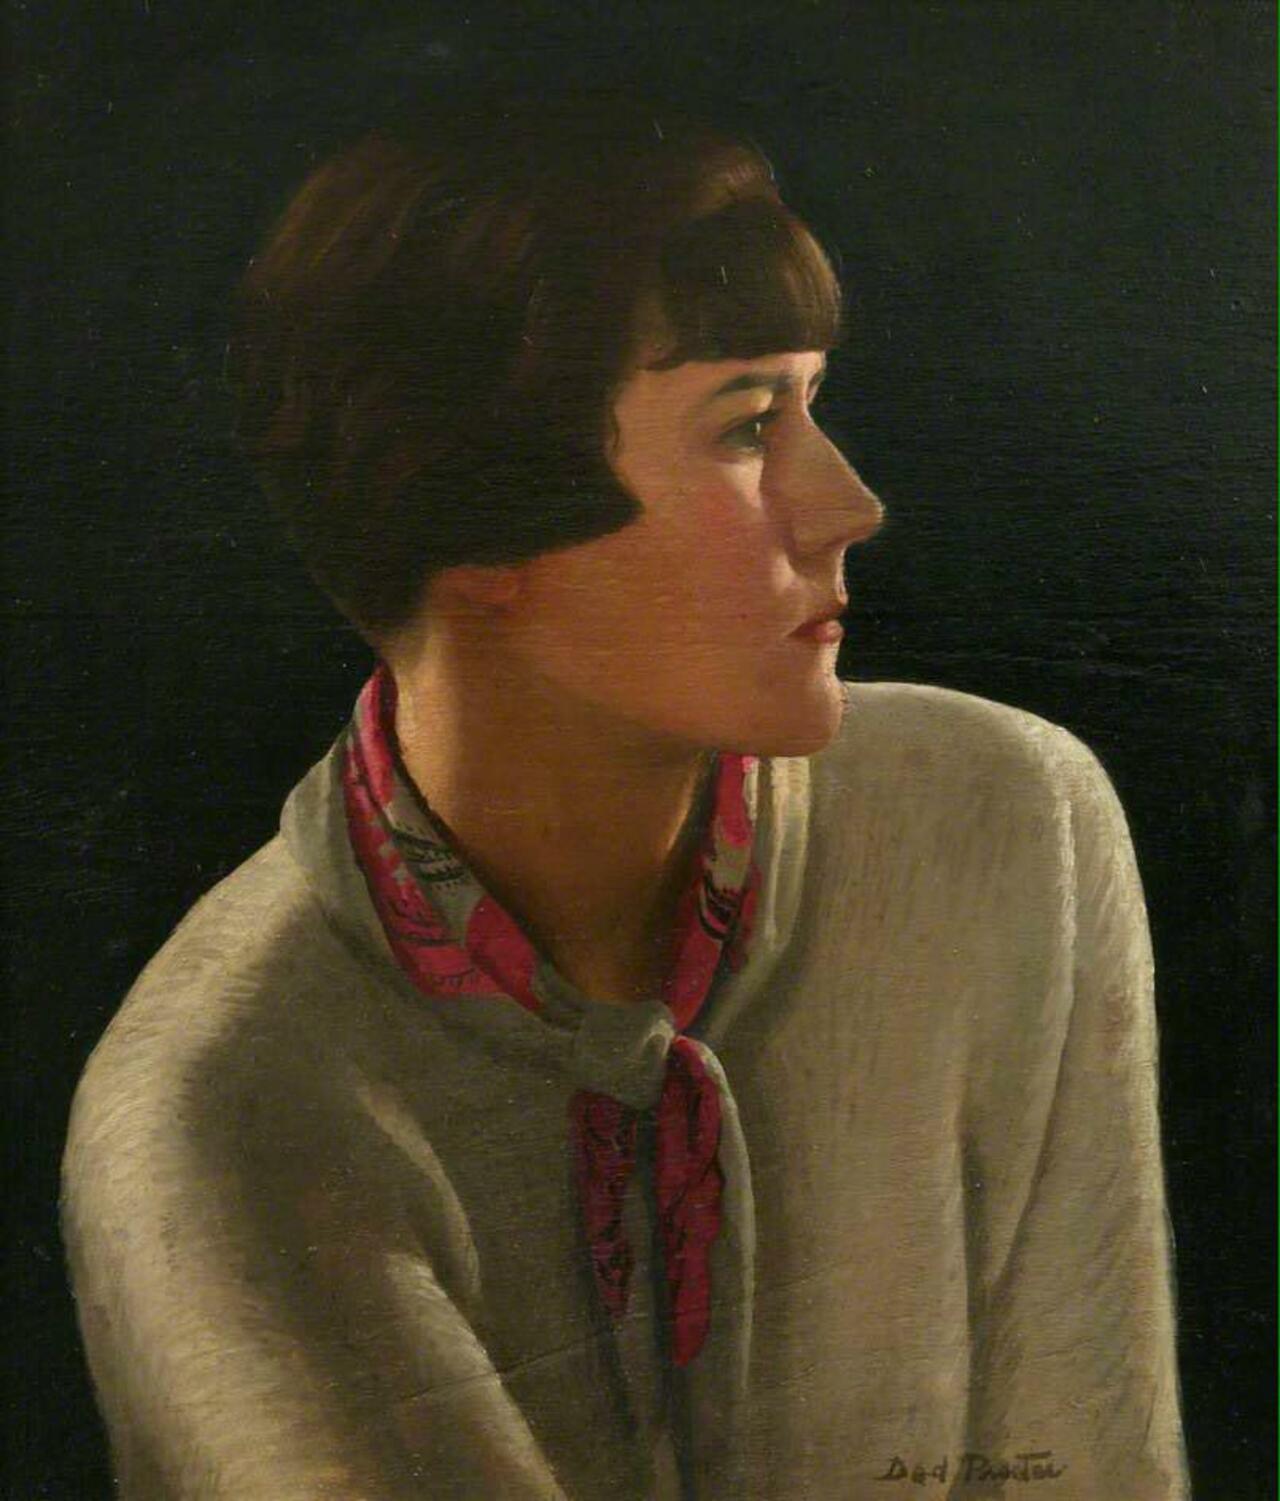 #art eh CUT ear if want fame "@geminicat7: 'Self Portrait'
Dod Procter (1892-1972) #art 
http://bbc.co.uk/arts/yourpaint… http://t.co/jTY3mrX9CD"